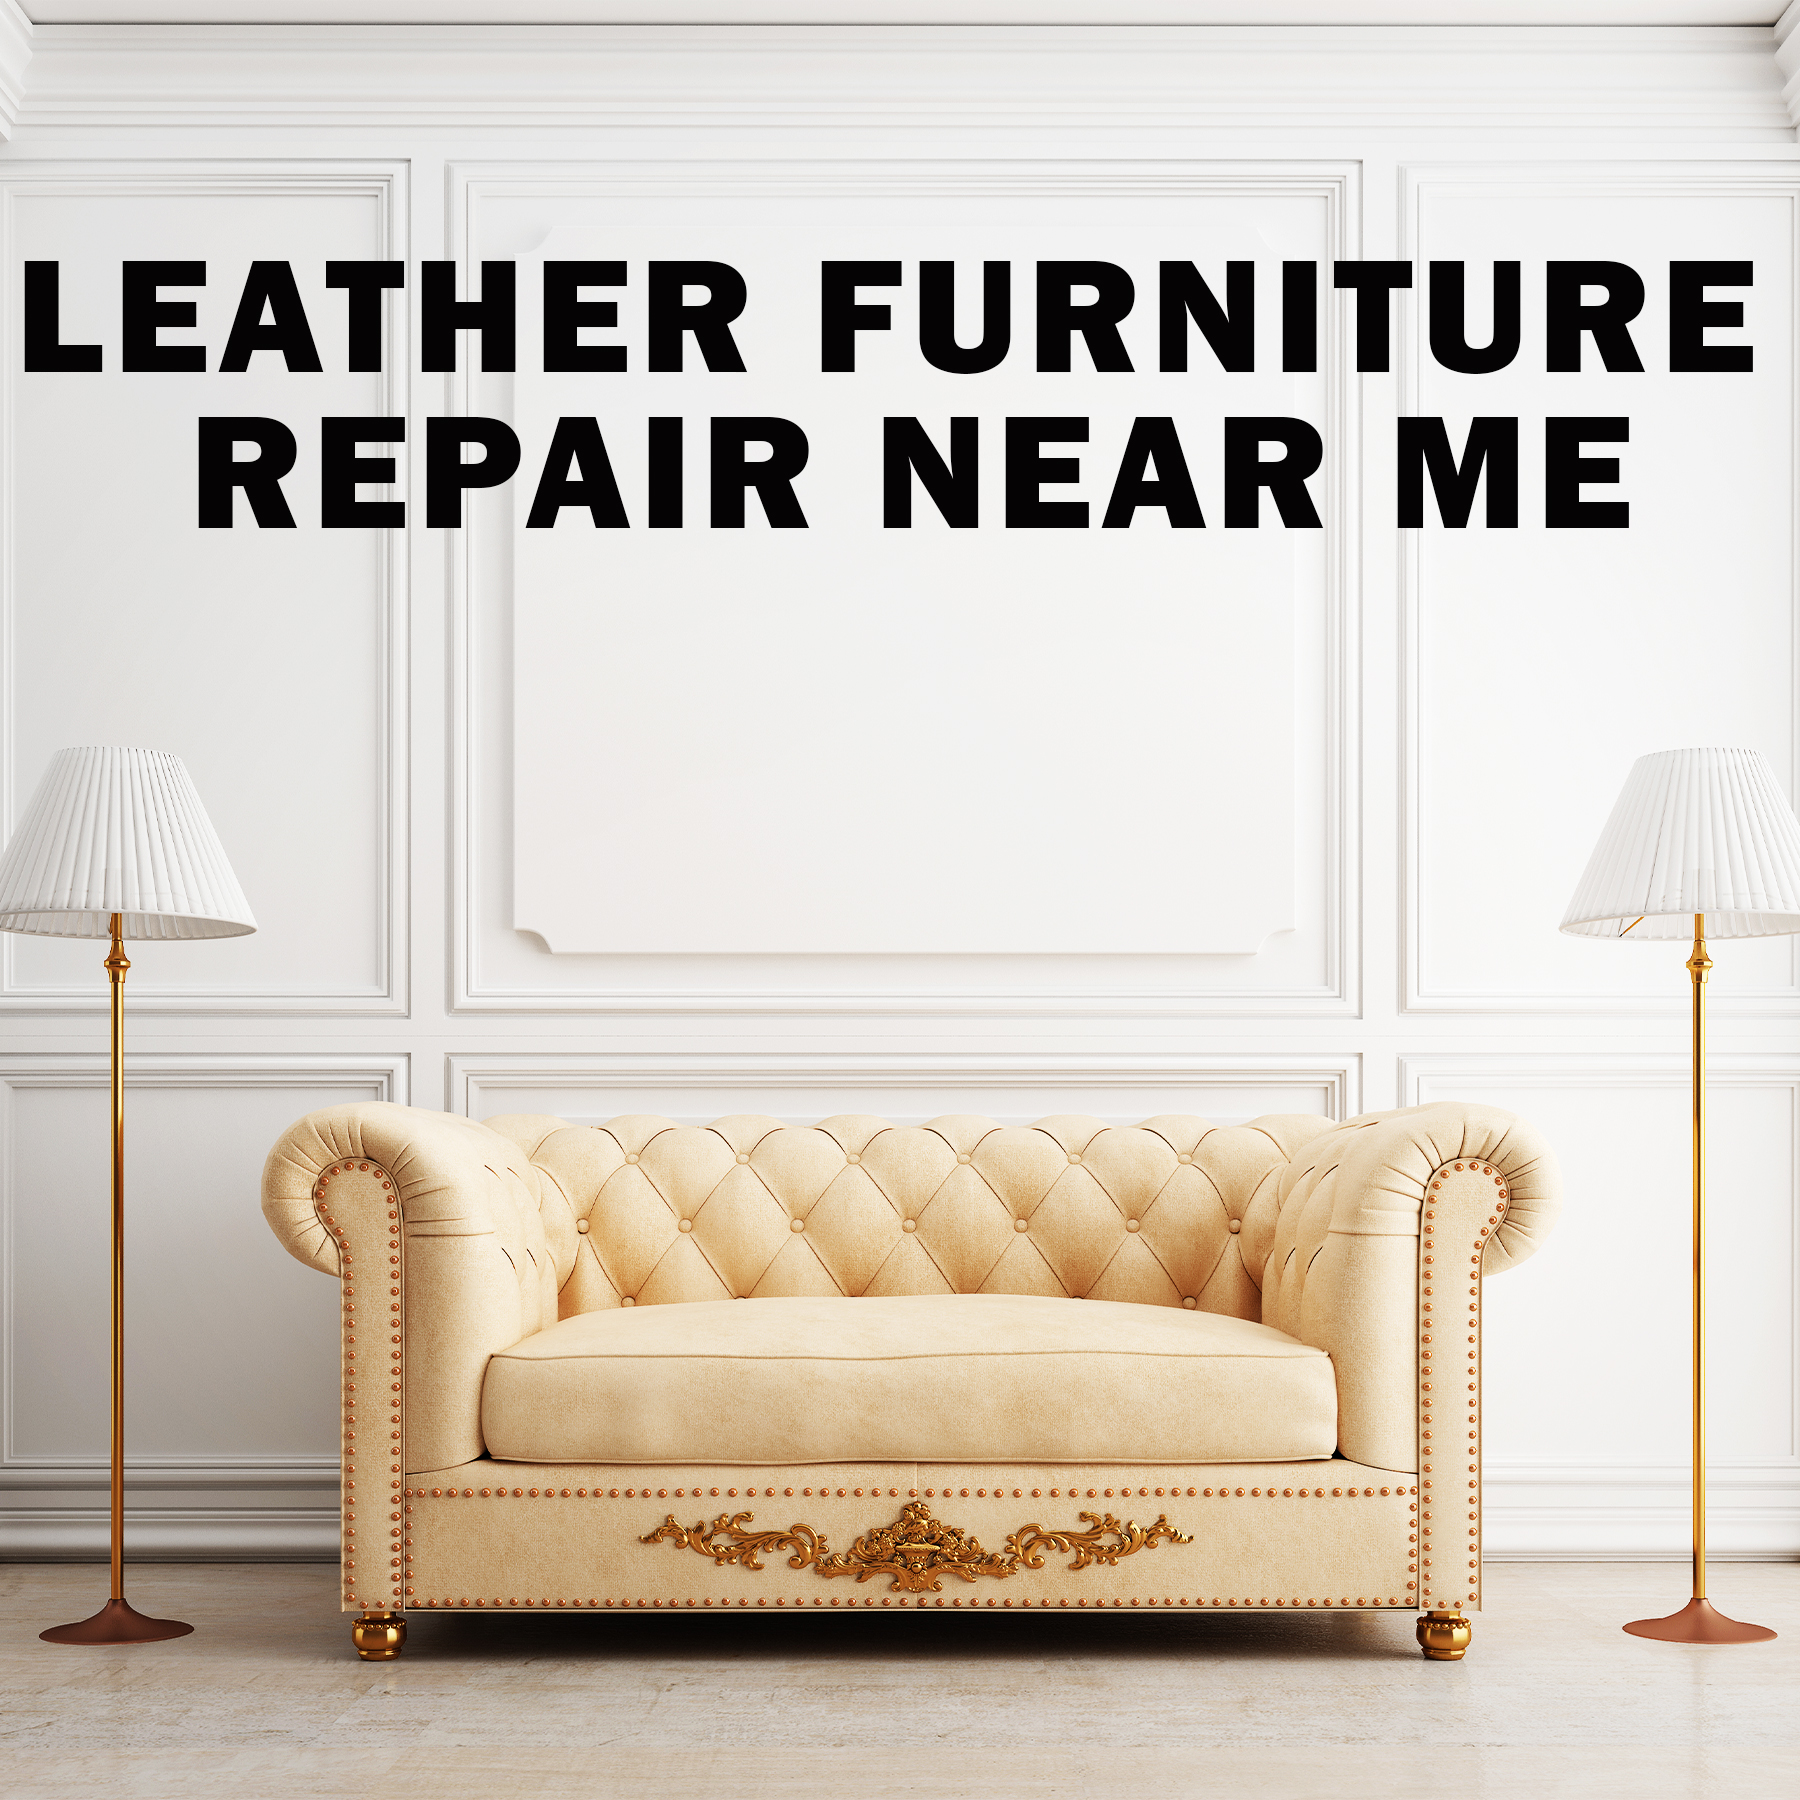 Leather Furniture Repair near Me